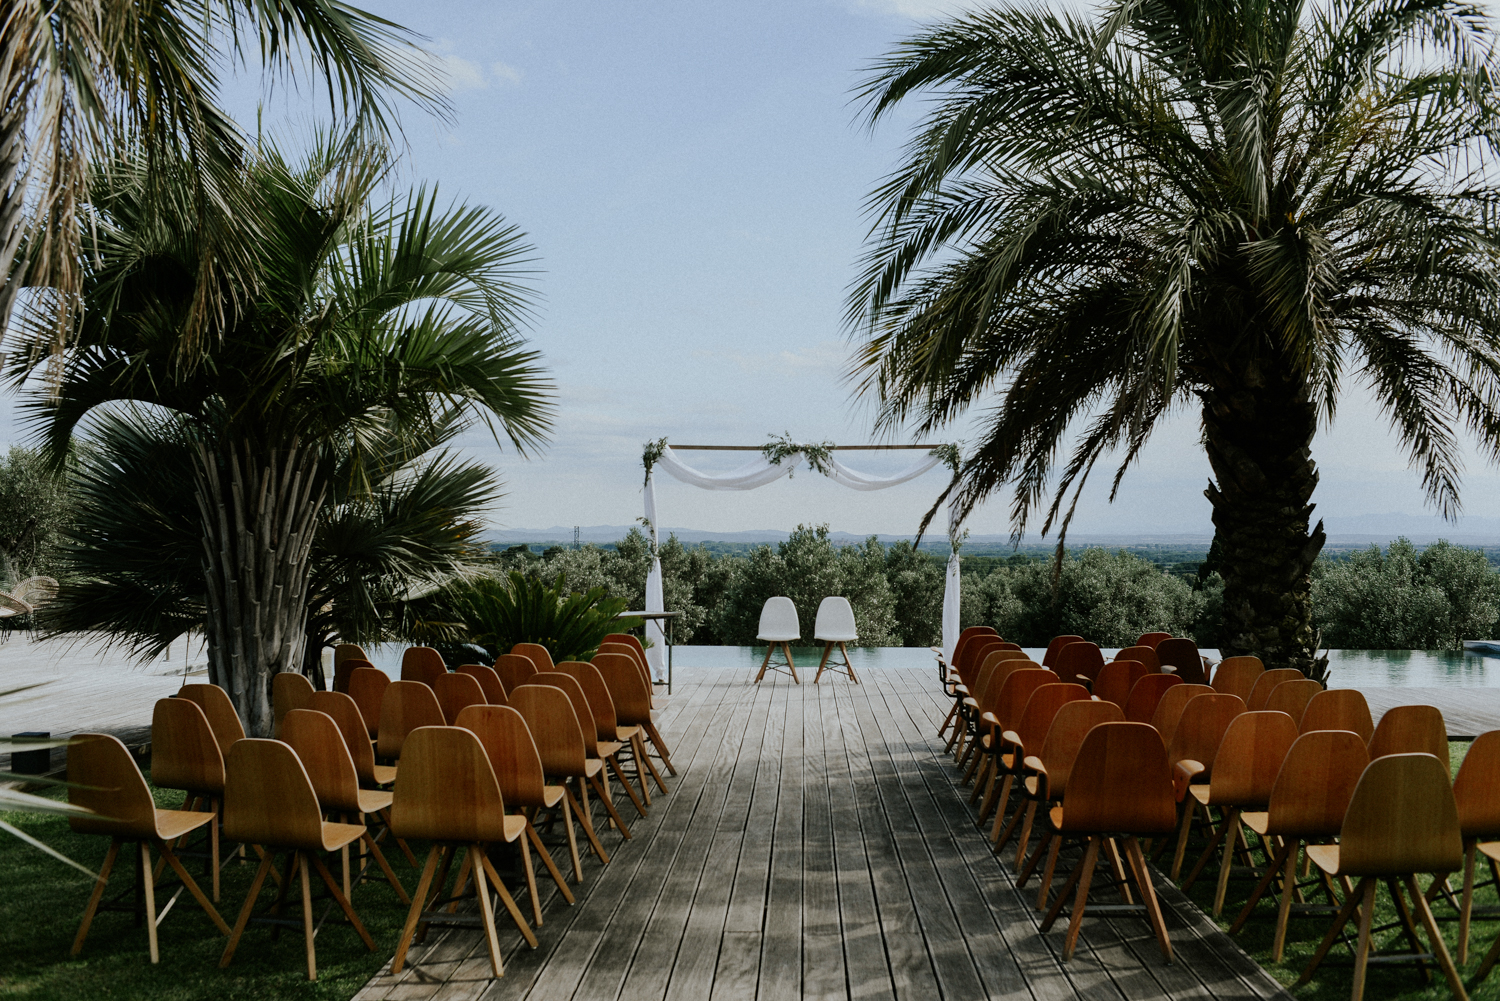 Photographe mariage hotel mas lazuli costa brava - Décor cérémonie laïque en bord de piscine